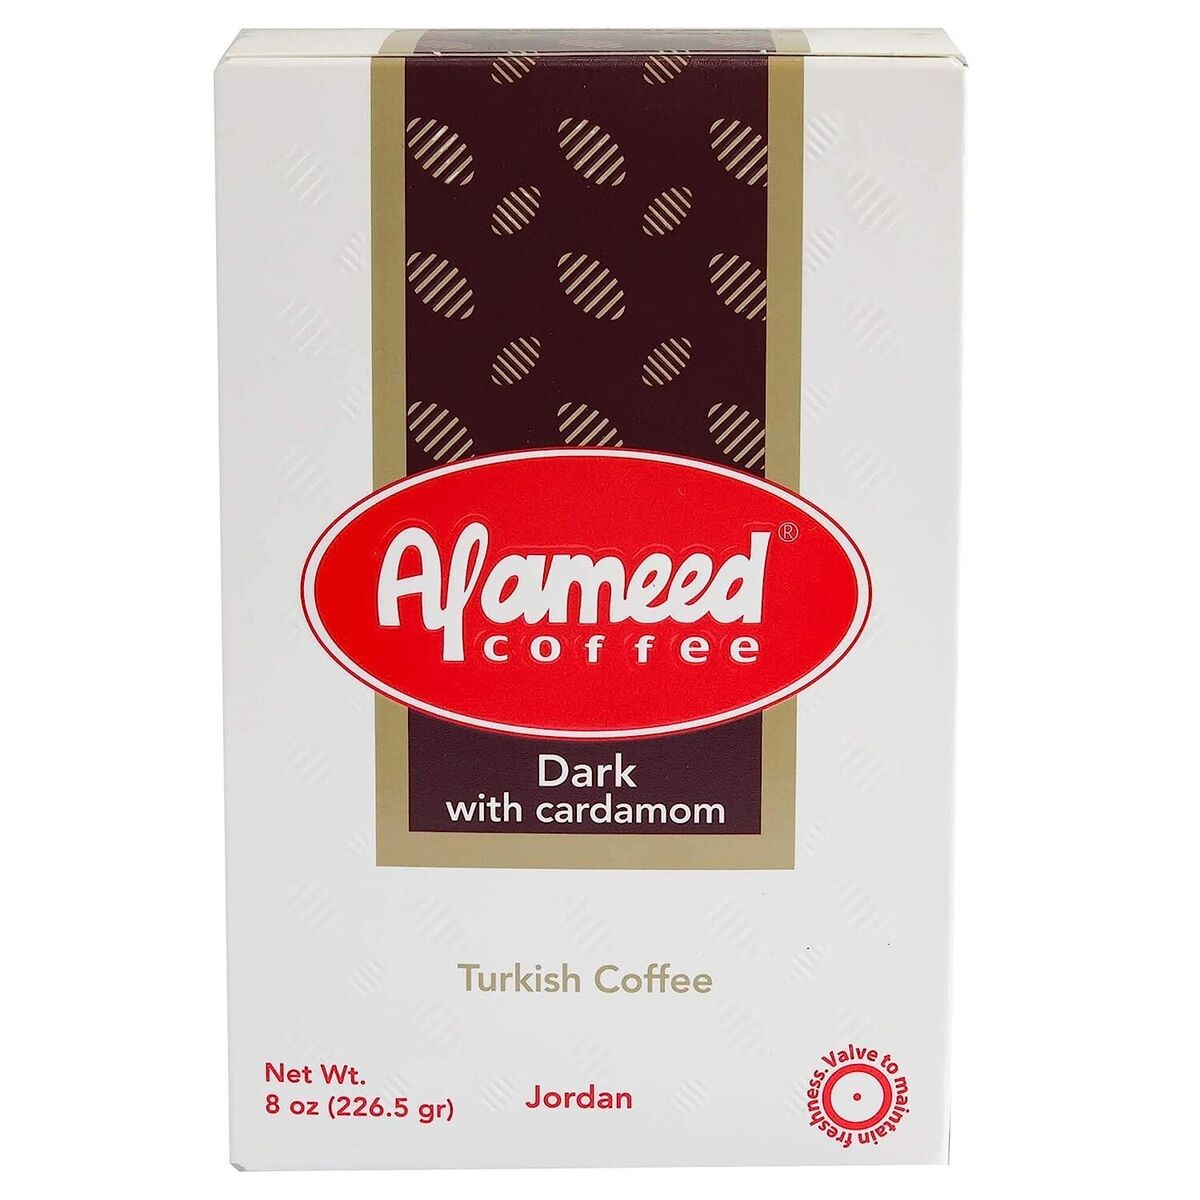 al-ameed-coffee-dark-with-cardamom-226g